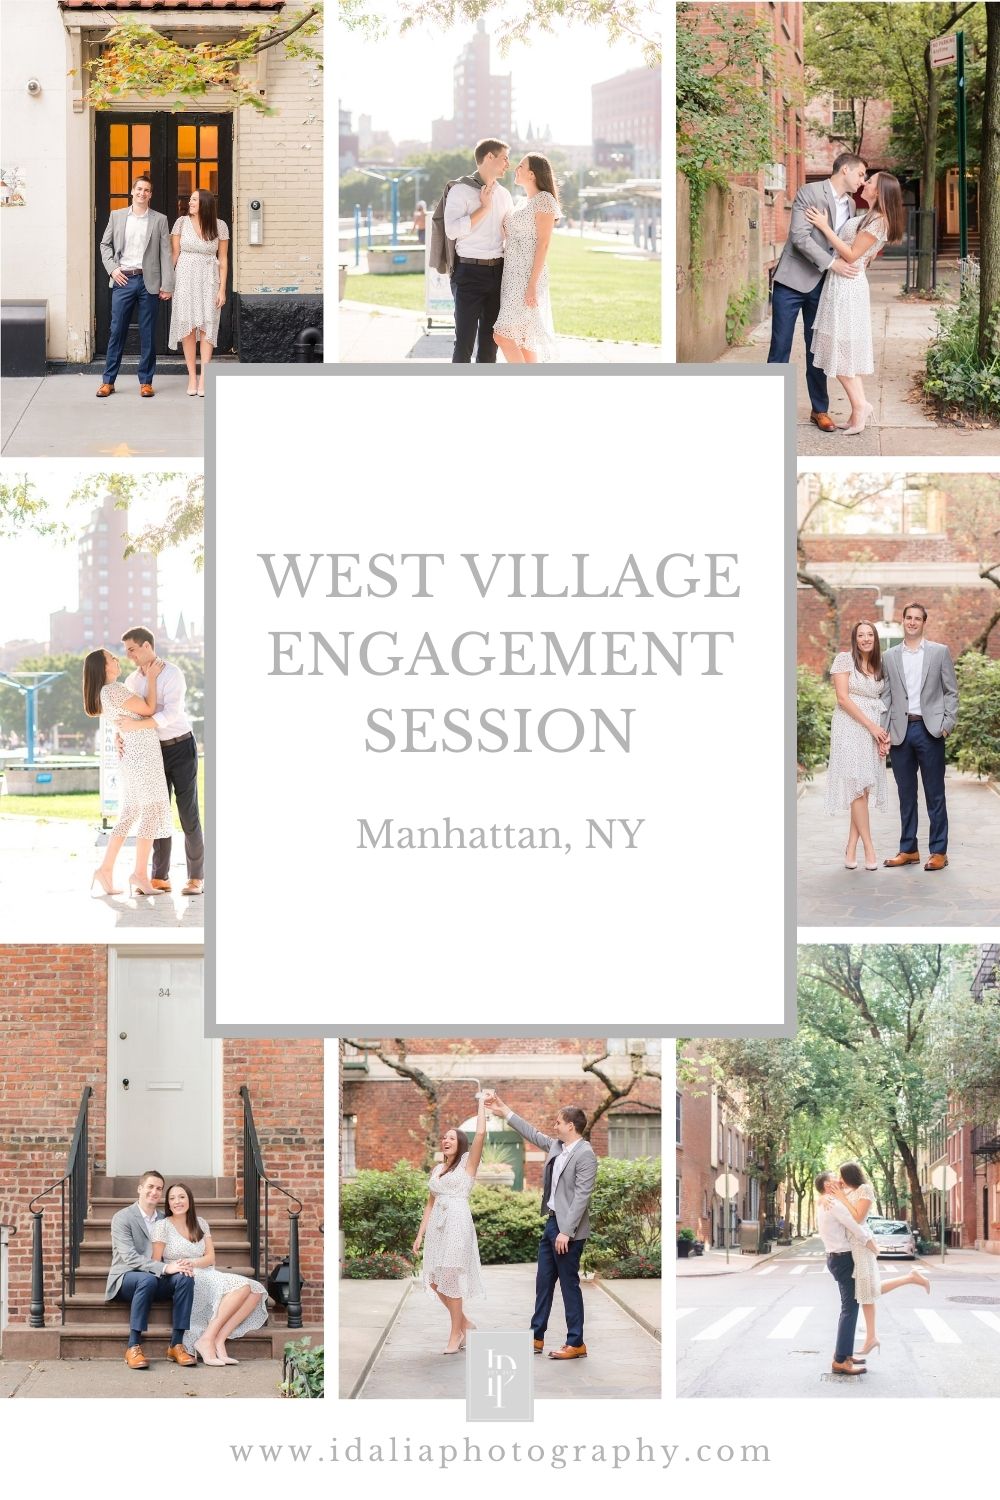 West Village Engagement Session with Idalia Photography